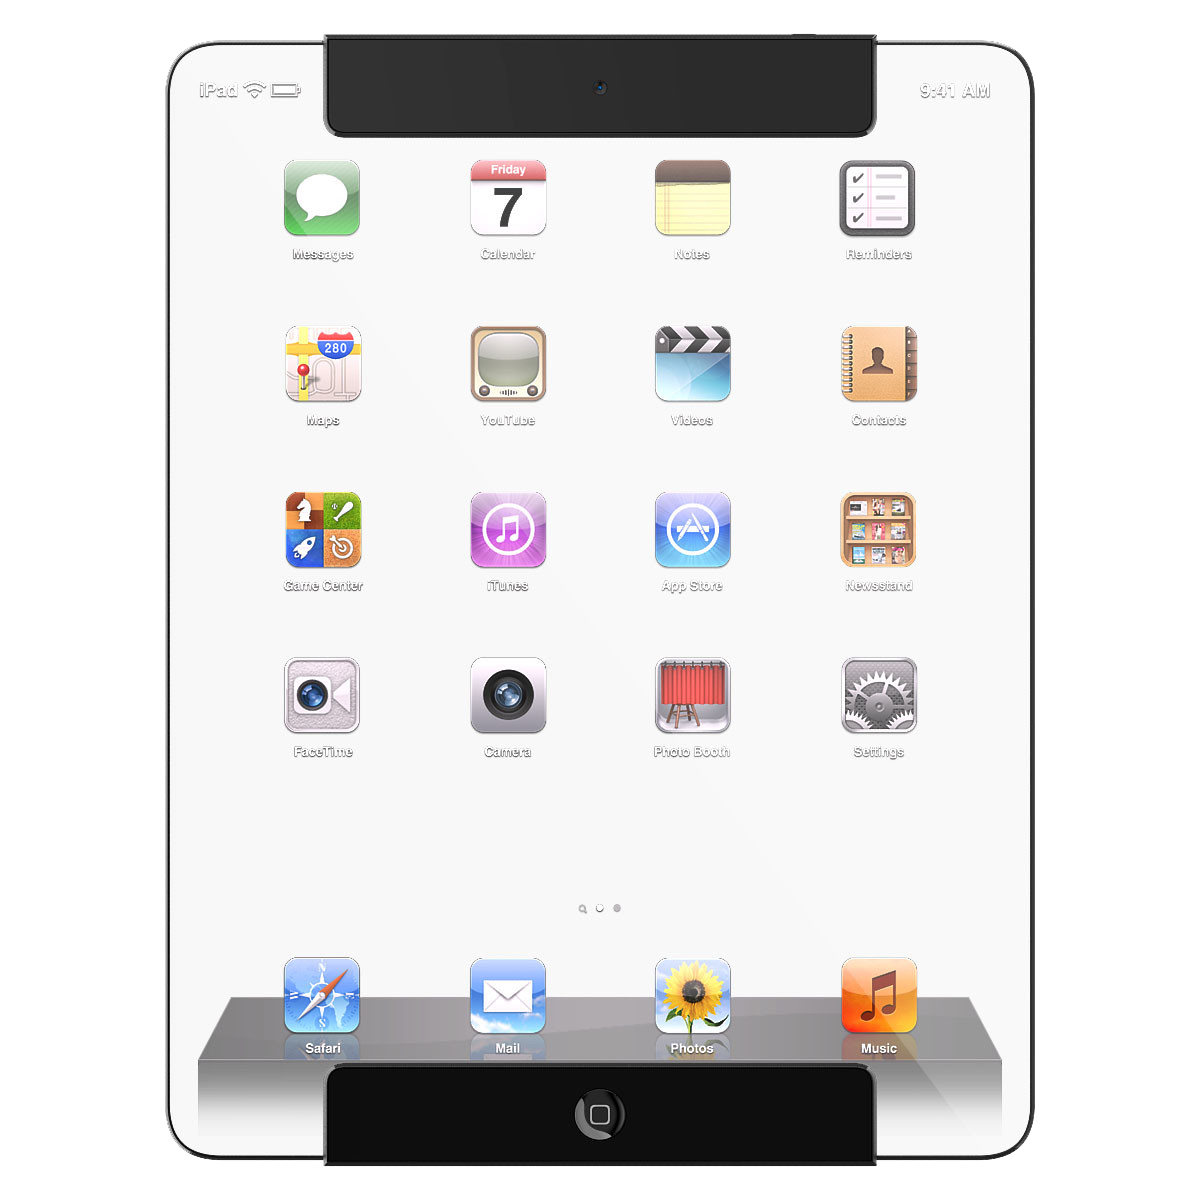 iClarified - Apple News - New Transparent iPad Concept [Video]